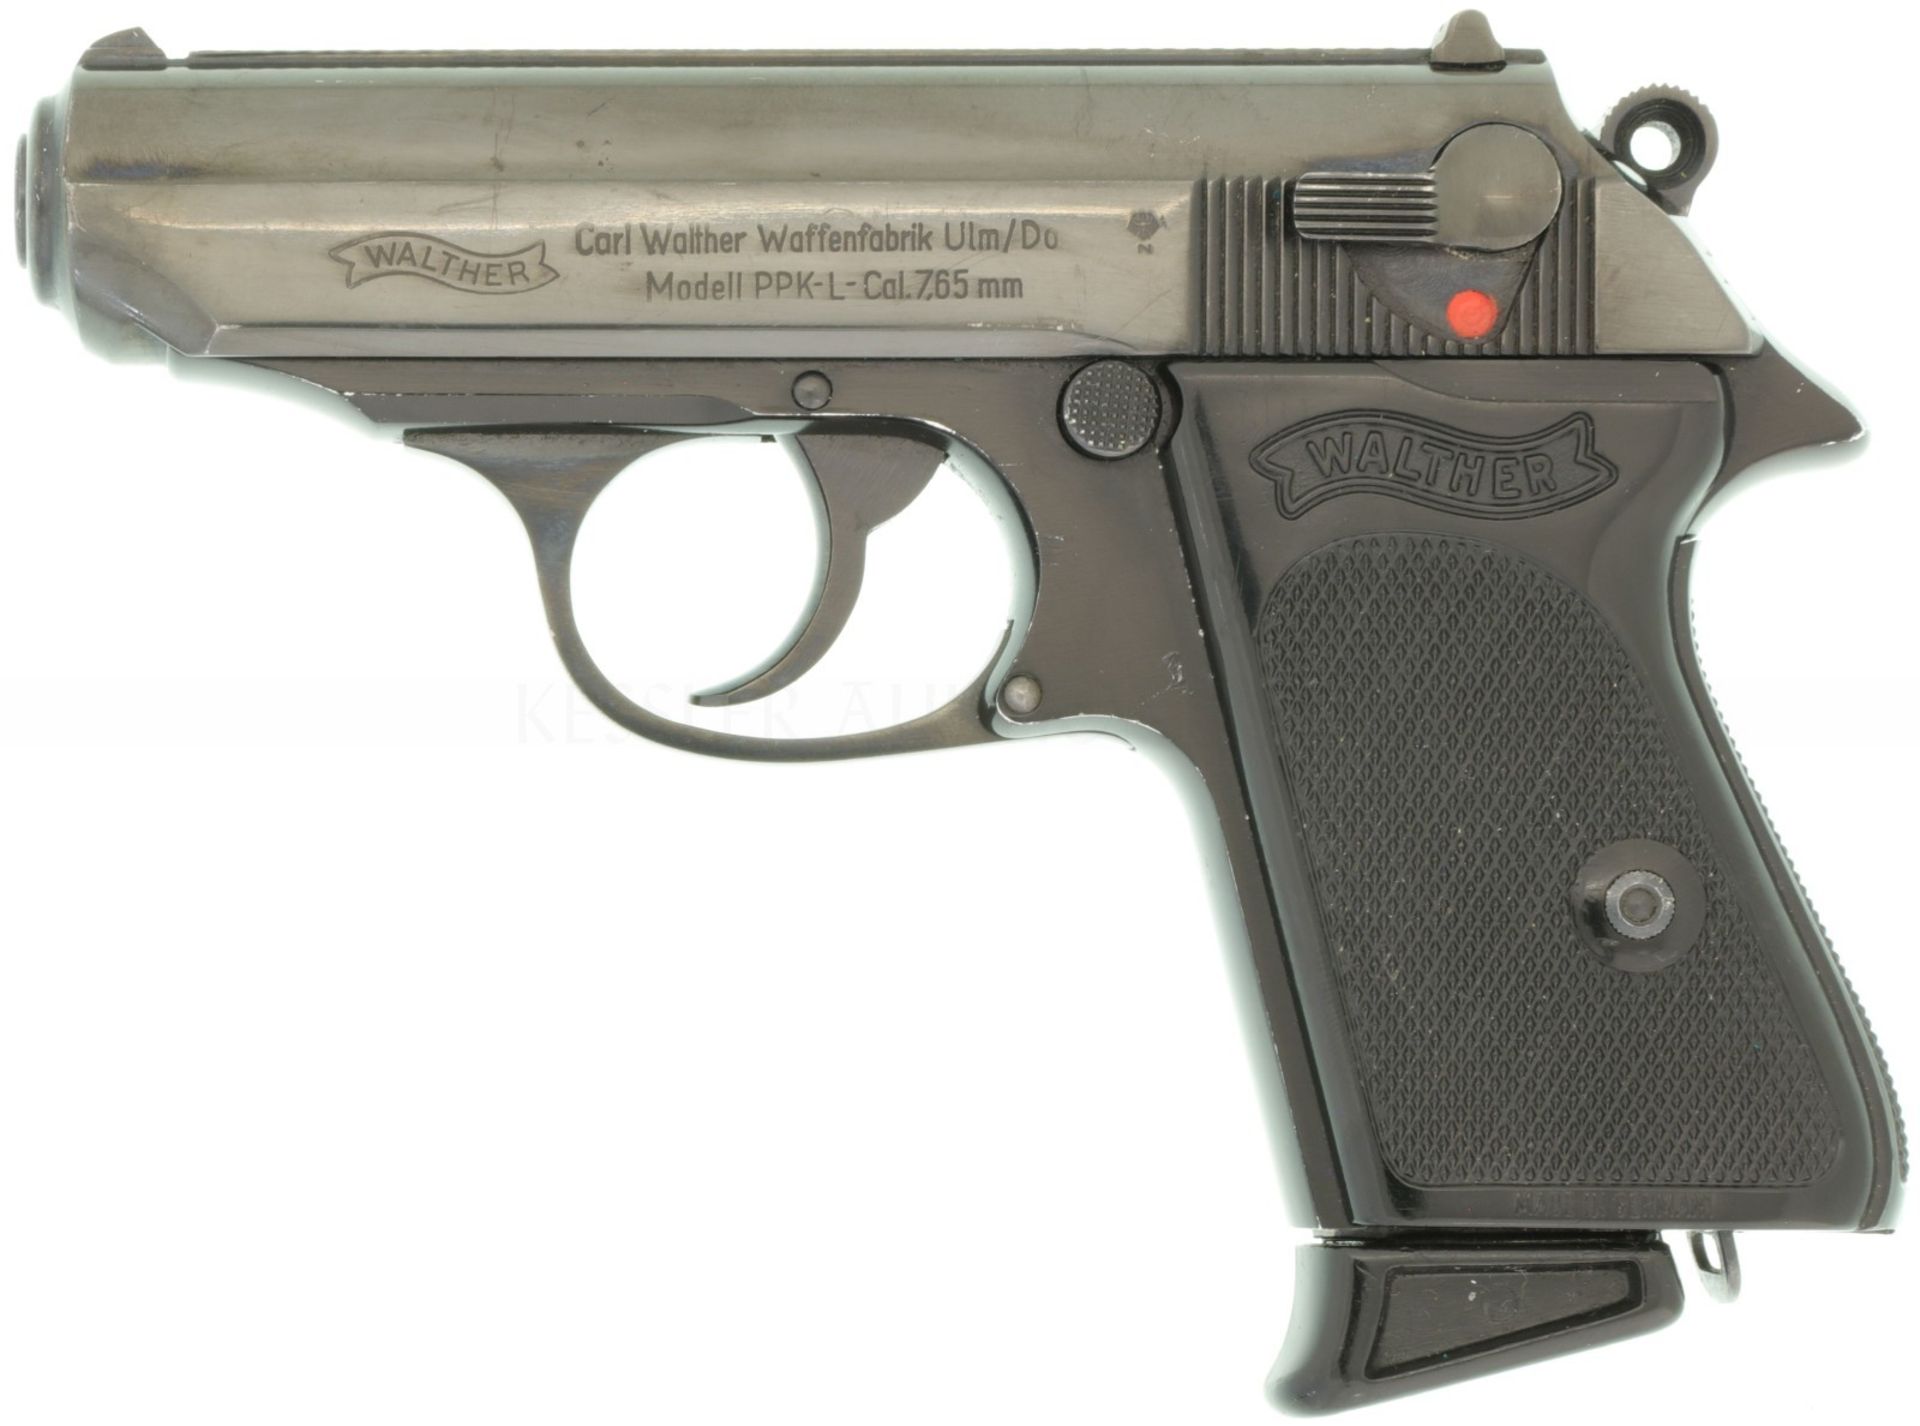 Pistole, Walther PPK-L, Ulm, Kal. 7.65mm